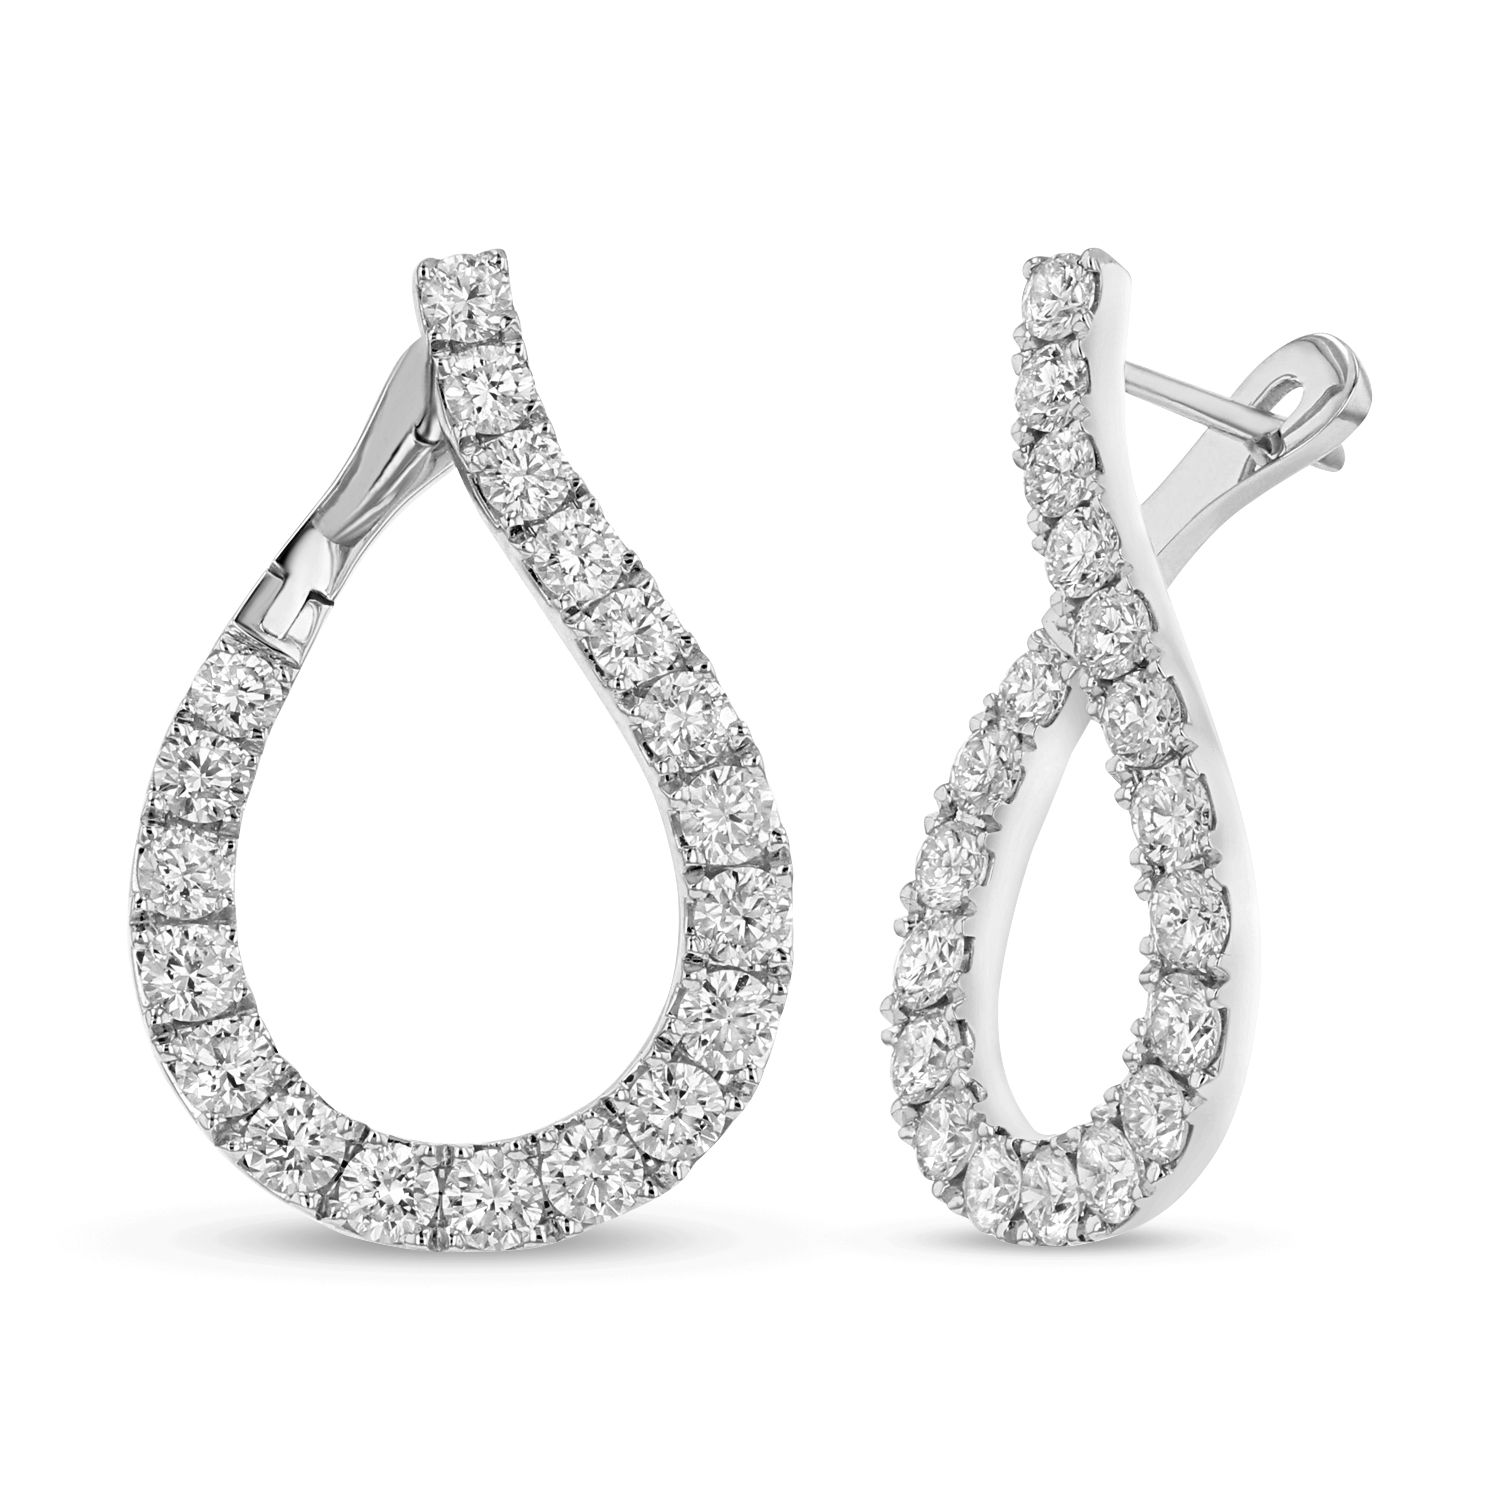 View 1.78ctw Diamond Earrings in 18K White Gold